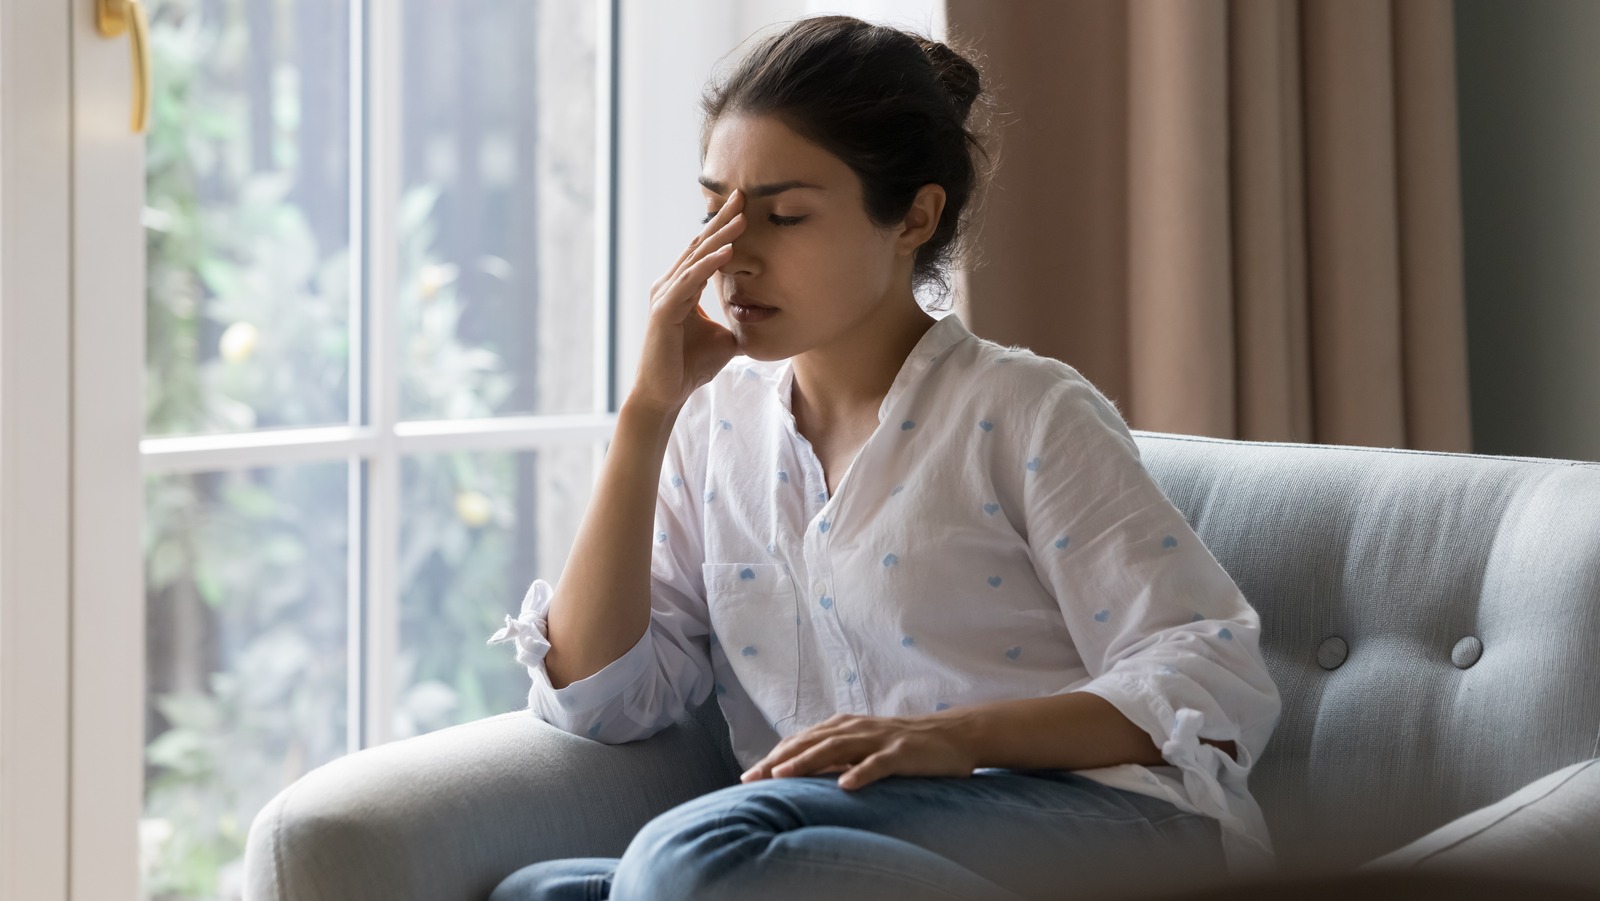 How To Recognize Pre-Migraine Symptoms